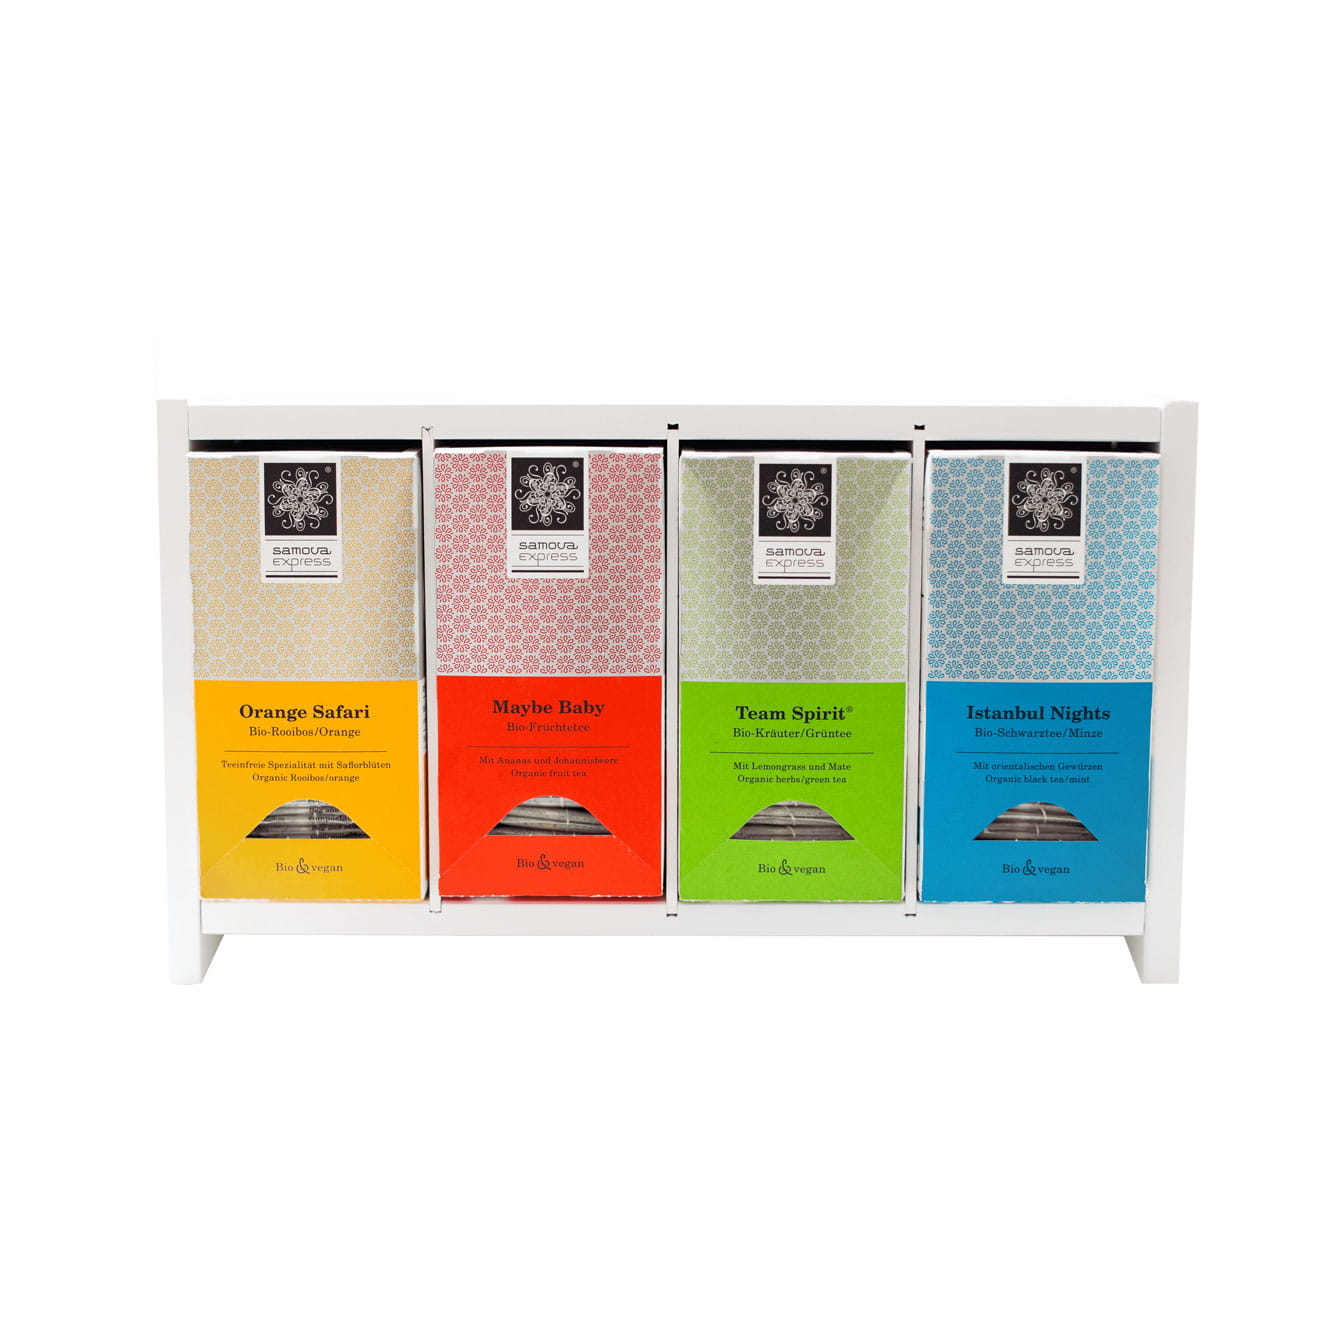 Quadruple display for samova express tea bags